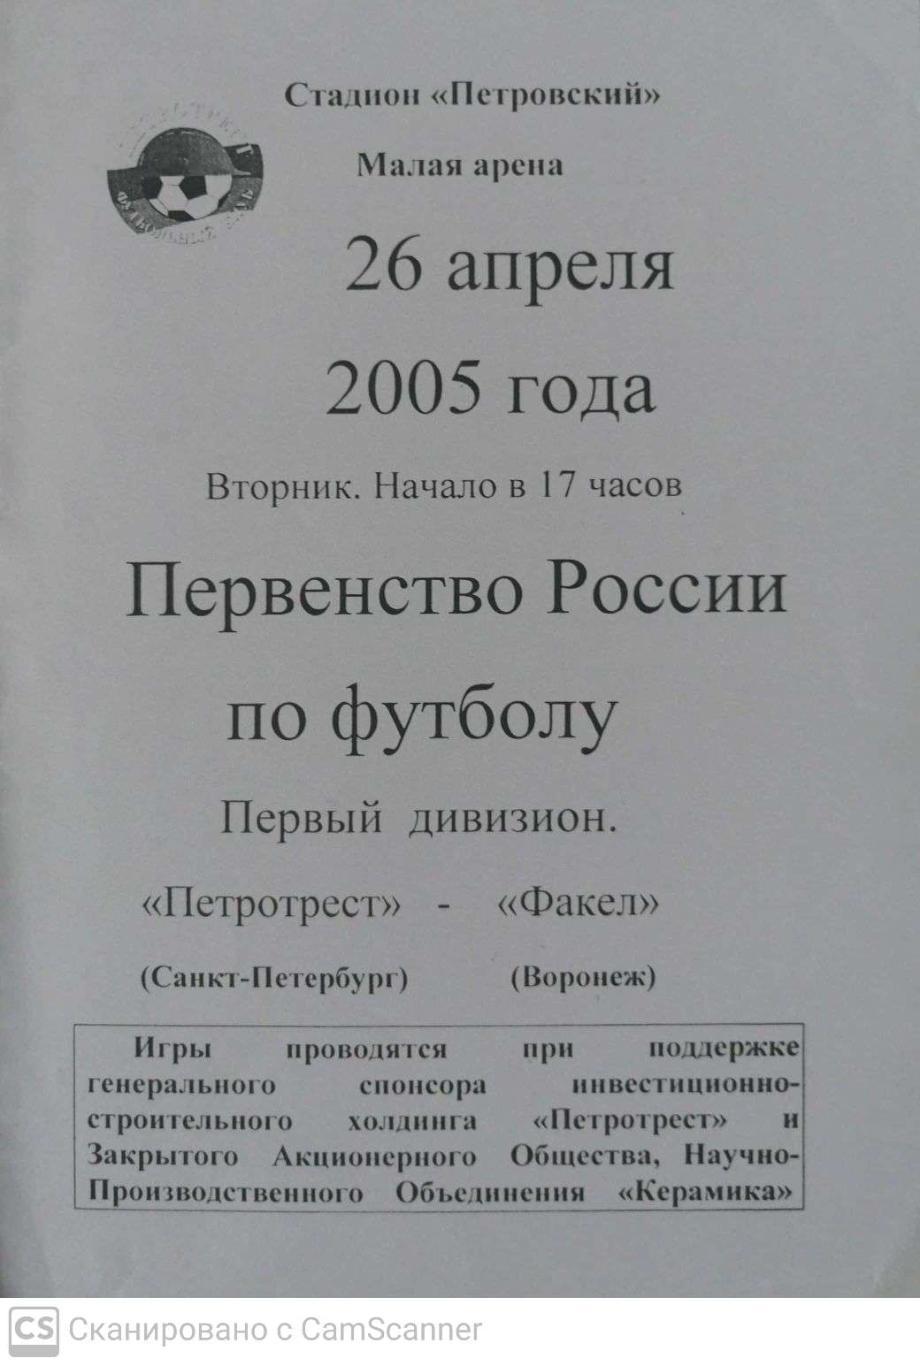 Первый дивизион. Петротрест СПб - Факел 26.04.2005